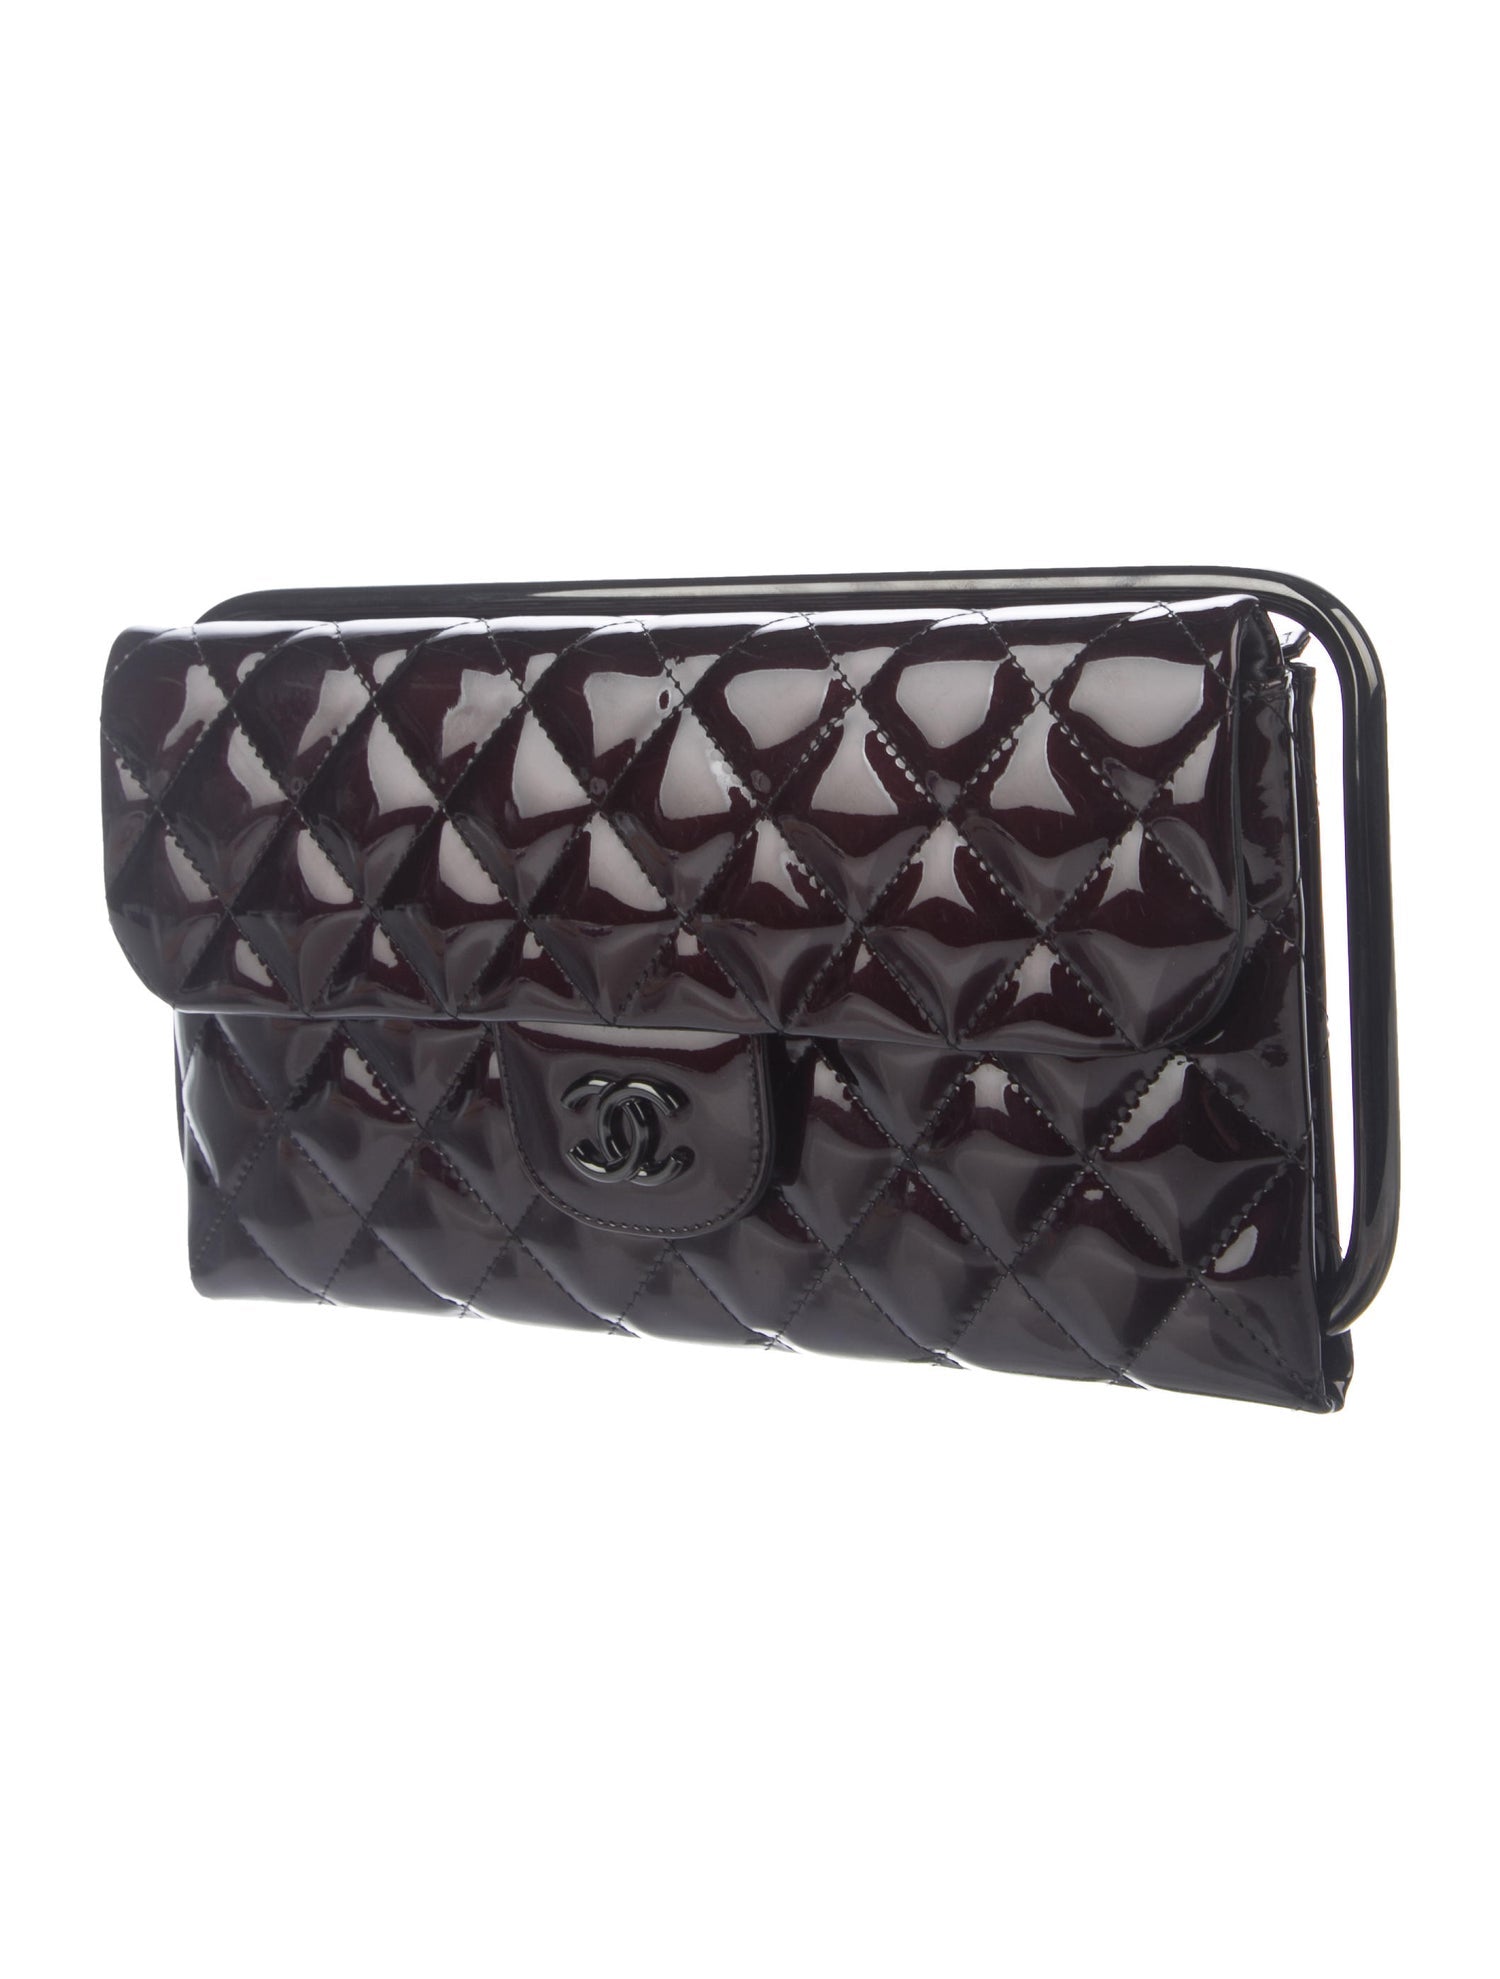 Chanel Black Patent CC Frame Flap Bag